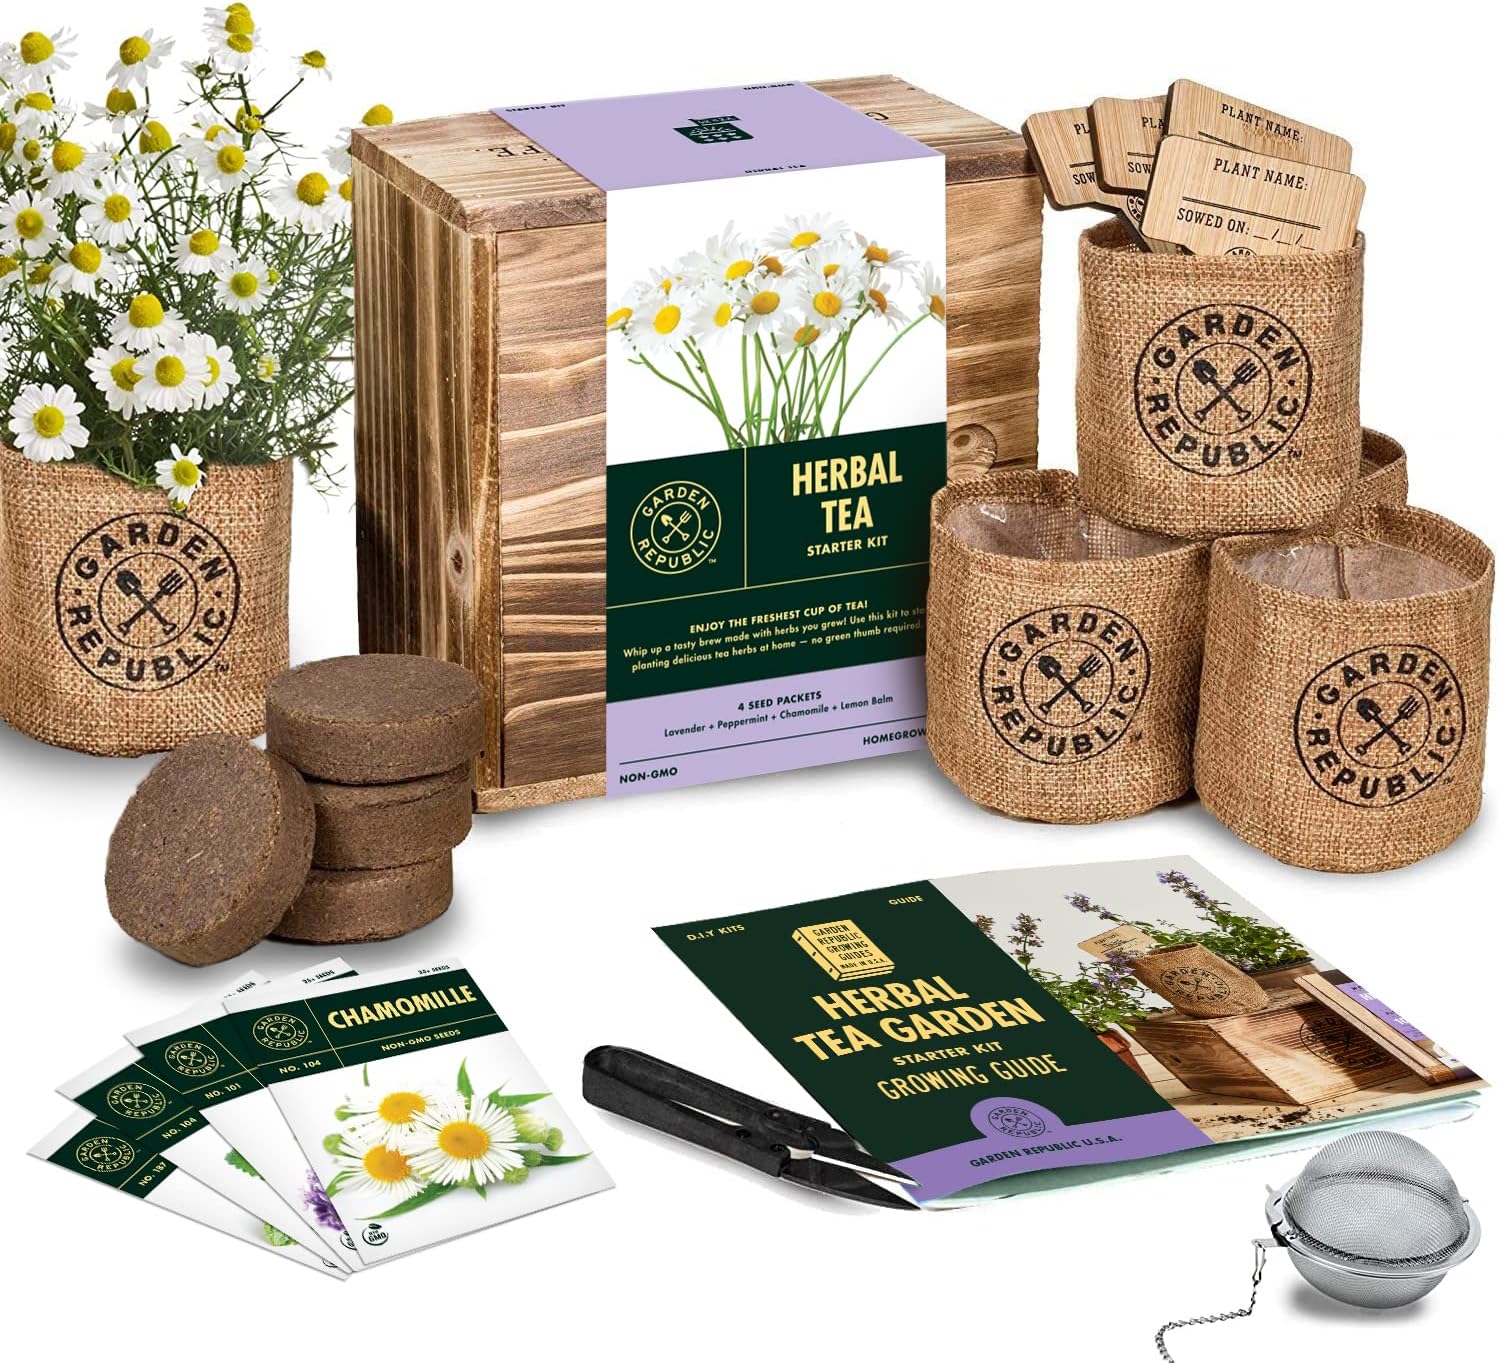 Indoor Herb Garden Seed Starter Kit - Herbal Tea Growing Kits, Grow Medicinal Herbs Indoors, Lavender, Chamomile, Lemon Balm, Mint Seeds for Planting, Soil, Plant Markers, Pots, Infuser, Planter Box